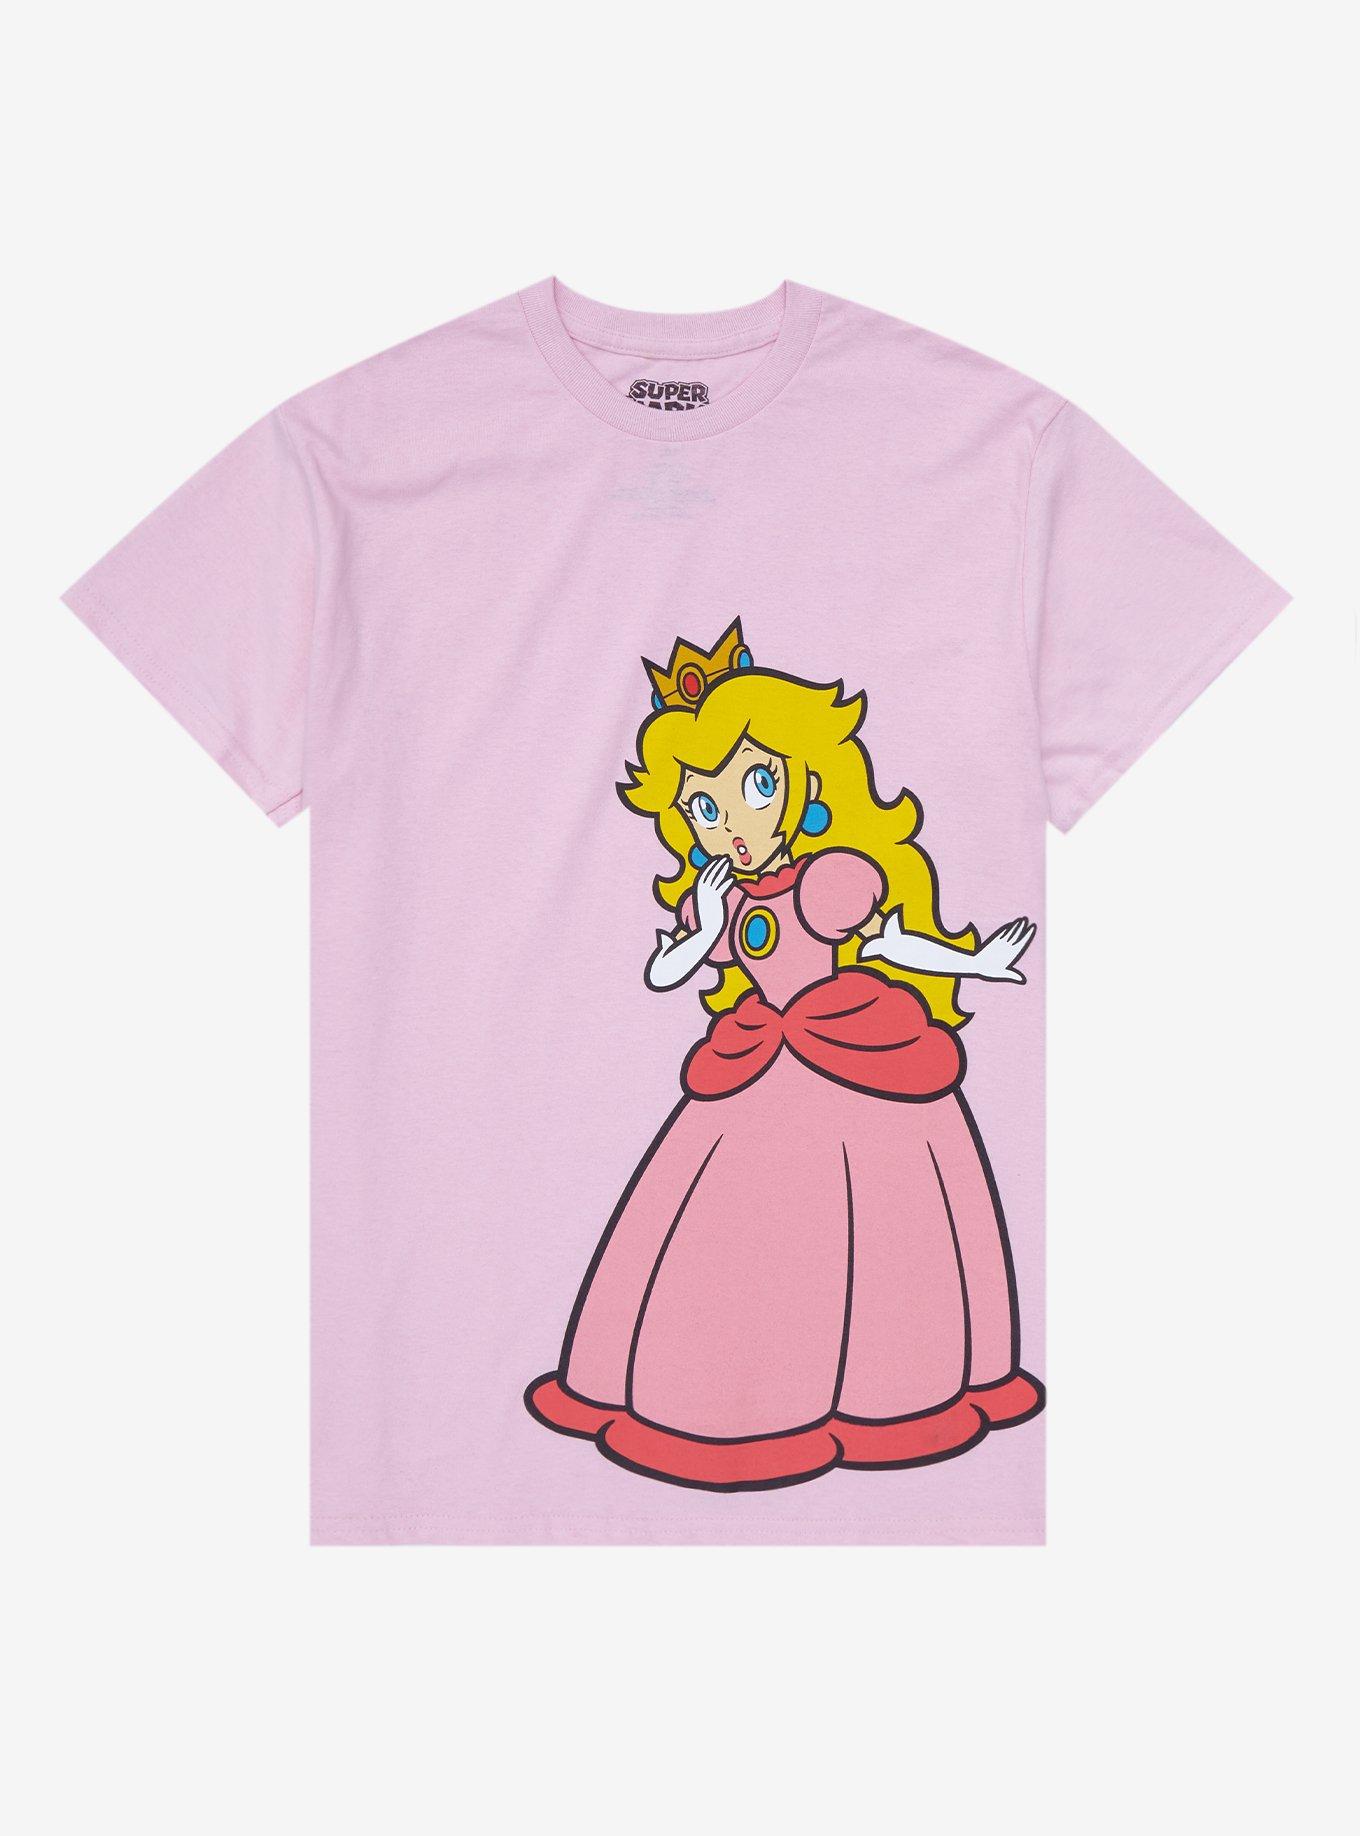 Super Mario Bros. Princess Peach Jumbo Graphic T-Shirt, PINK, hi-res